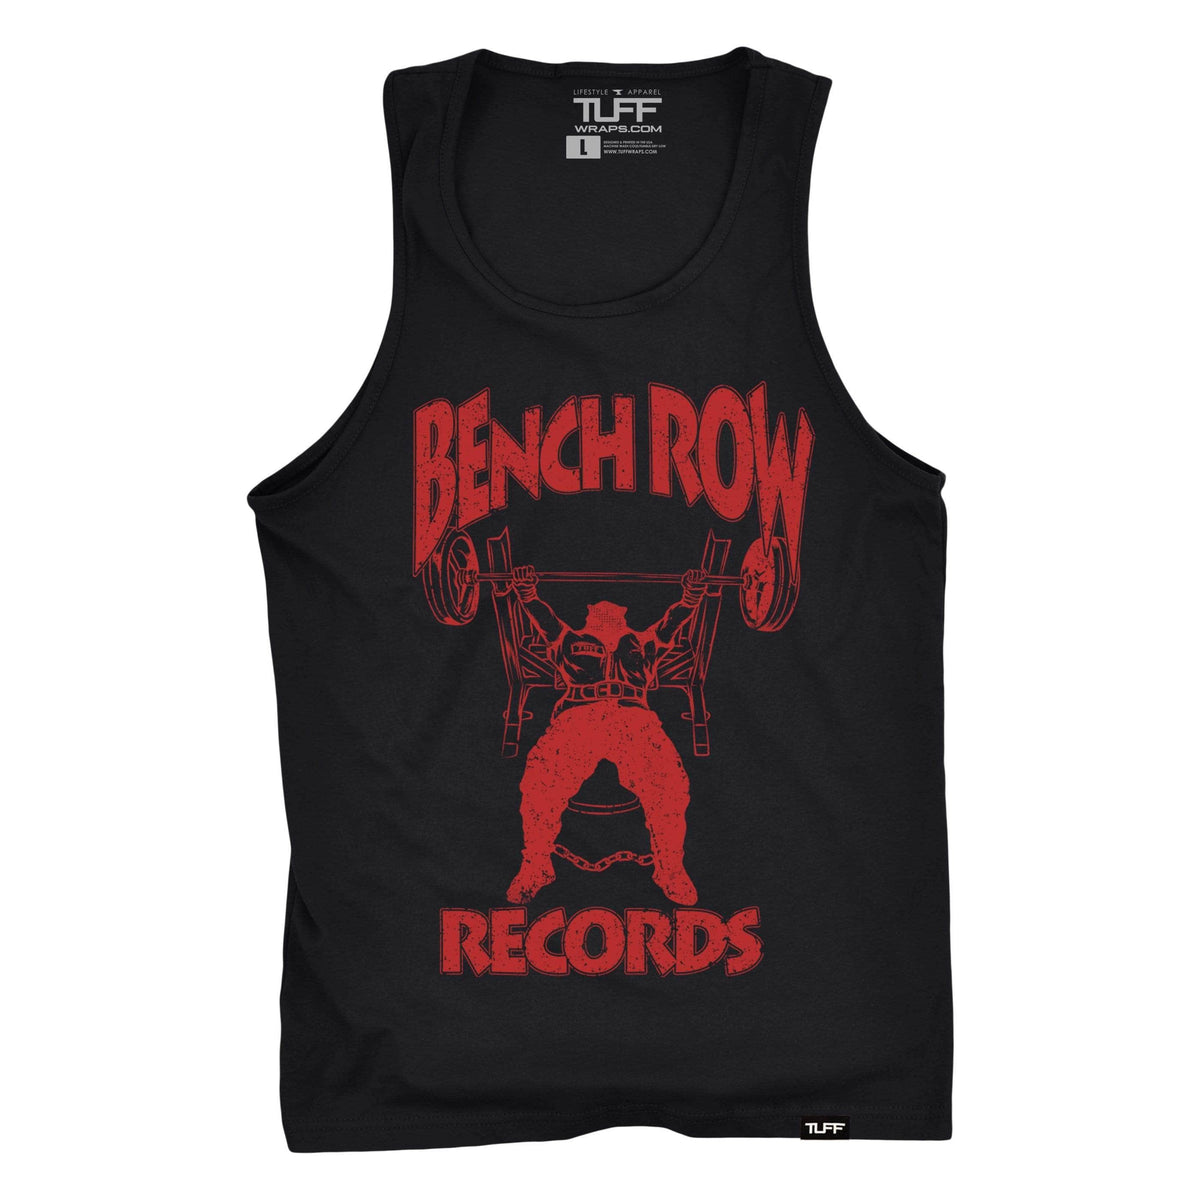 Bench Row Records Tank S / Black v1 TuffWraps.com